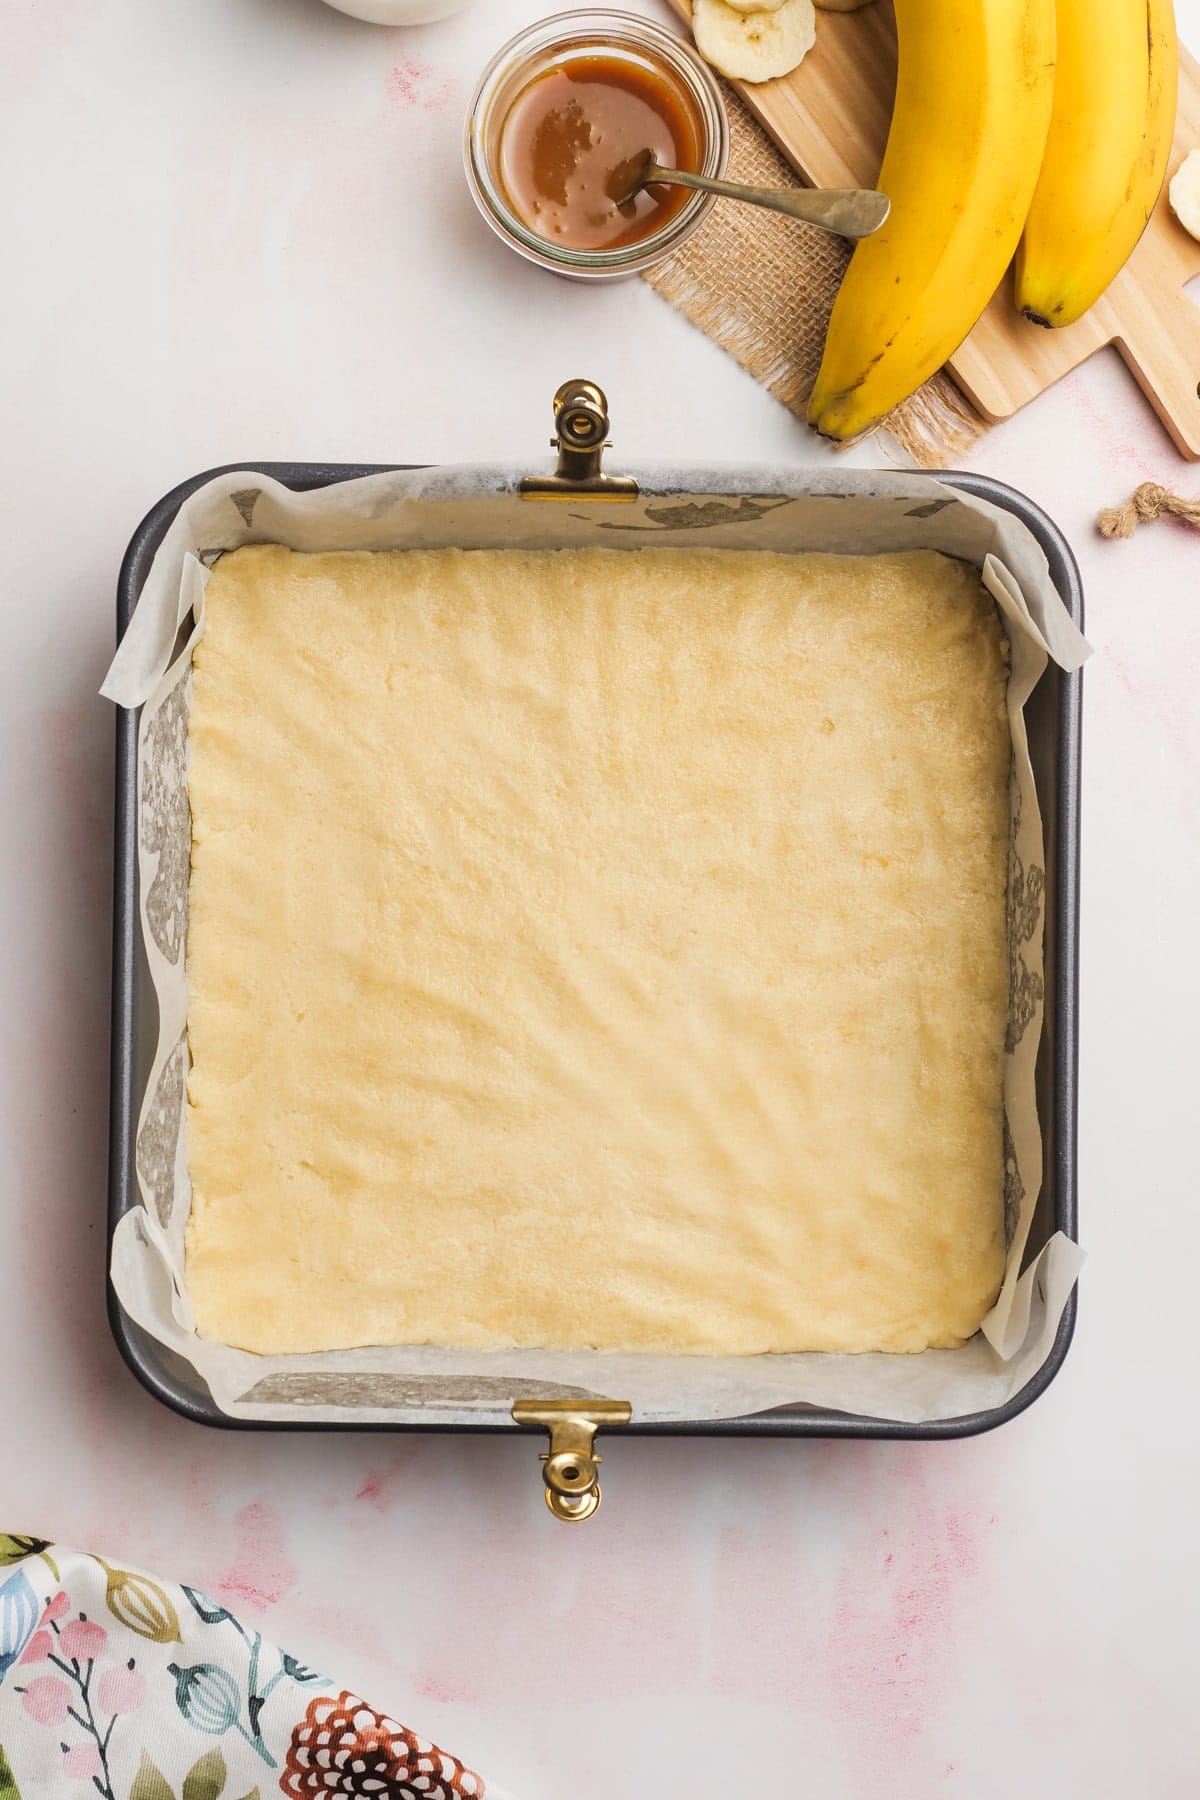 crust dough pressed into baking dish